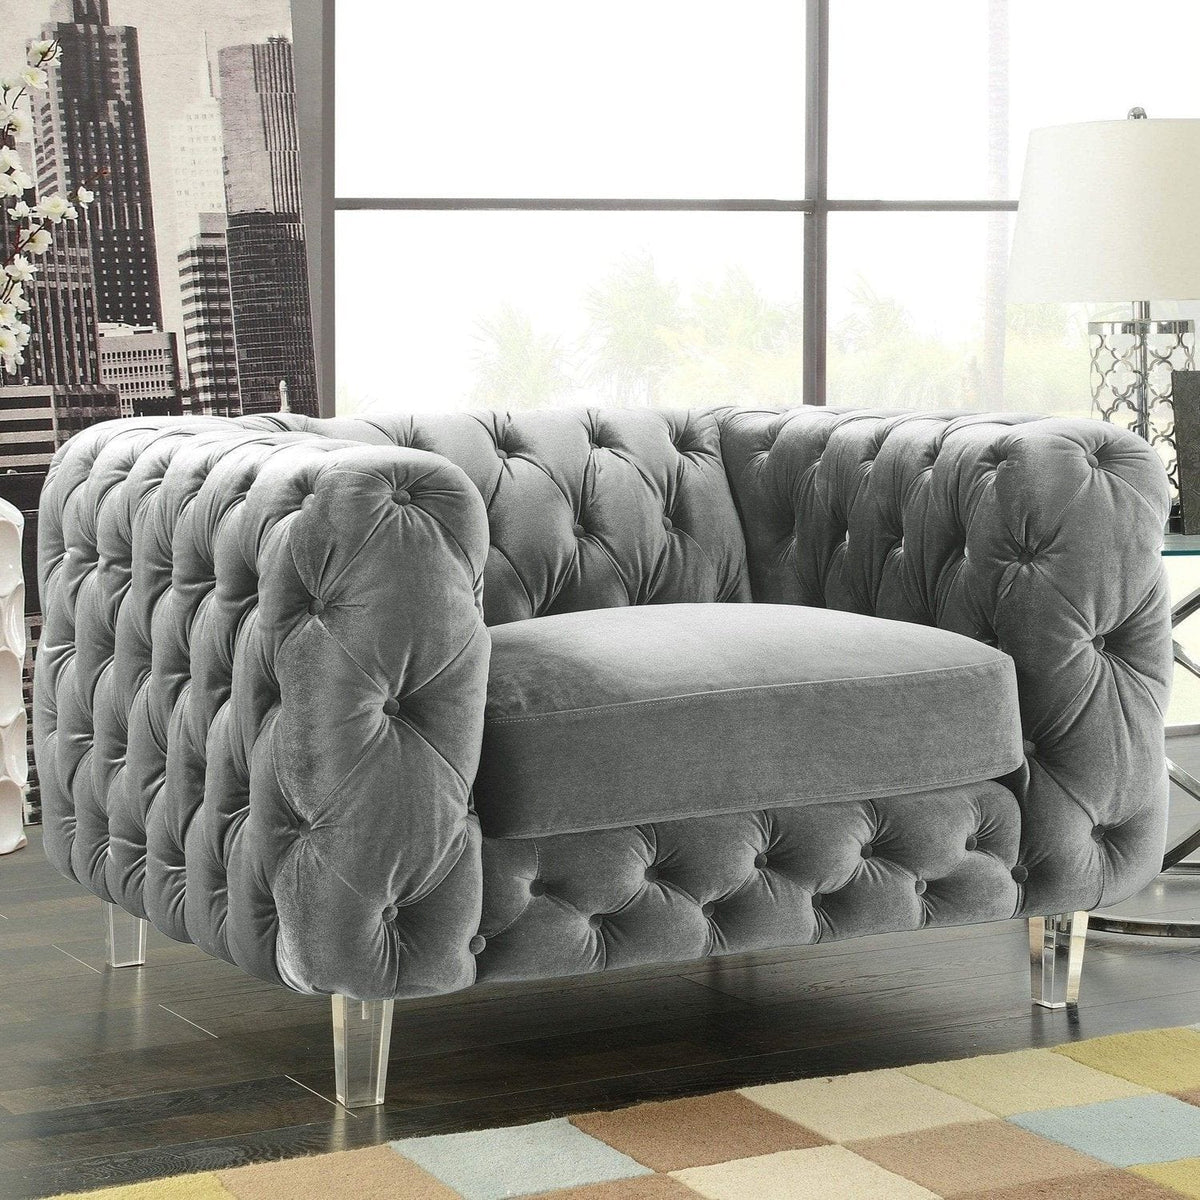 Iconic Home Syracus Plush Tufted Velvet Club Chair Grey